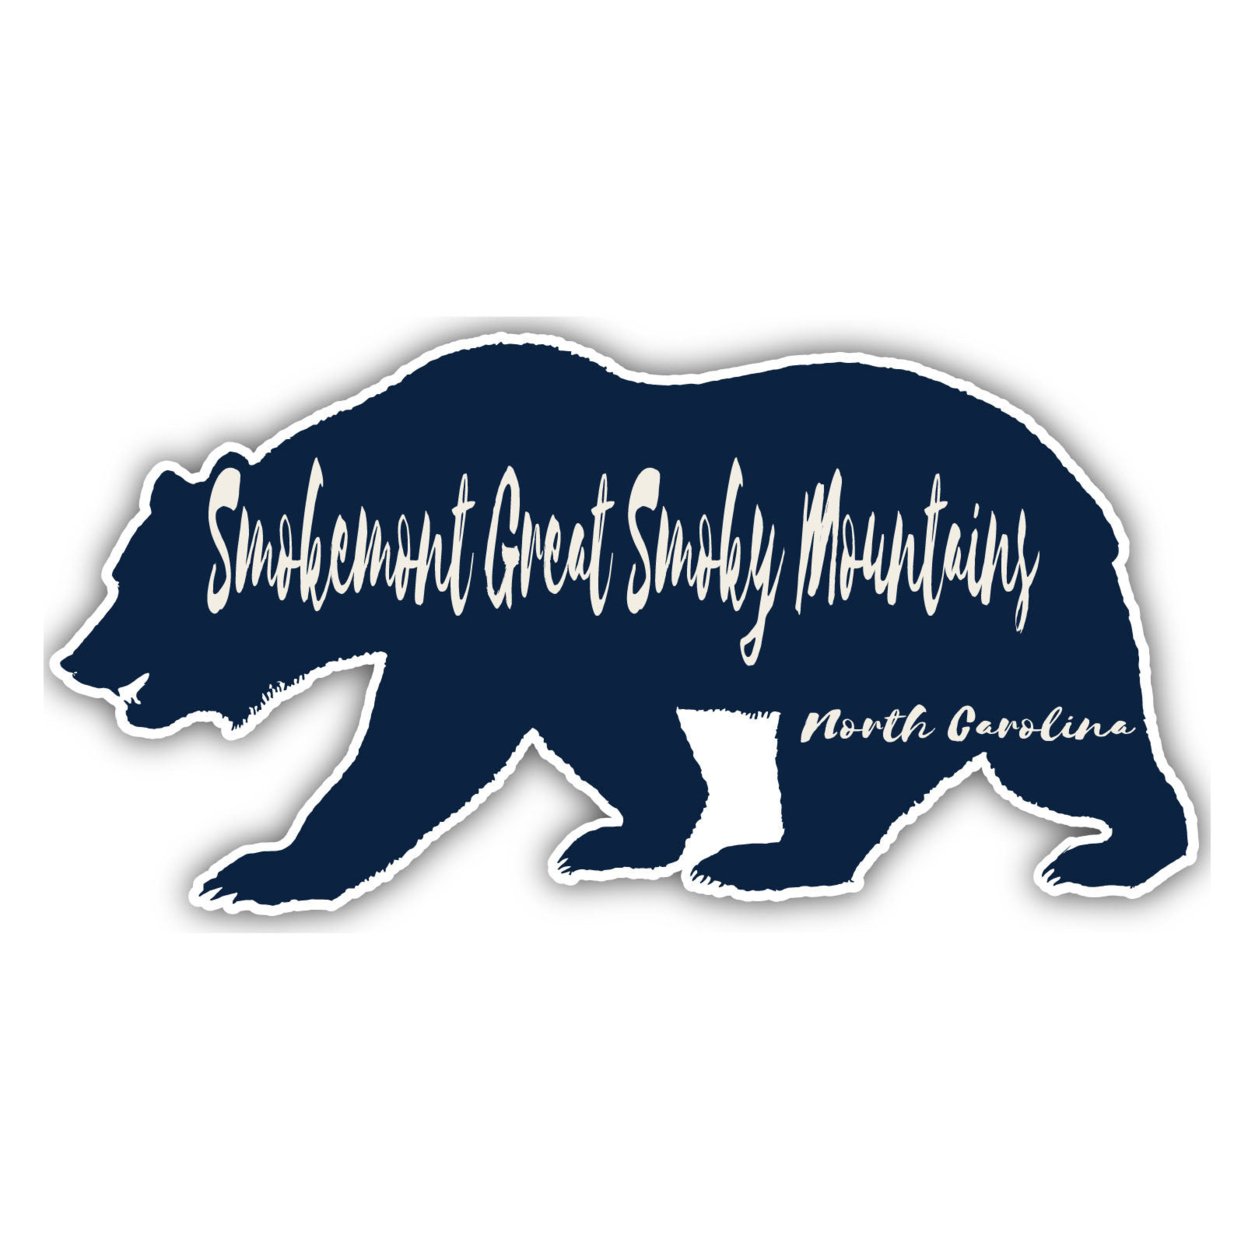 Smokemont Great Smoky Mountains North Carolina Souvenir Decorative Stickers (Choose Theme And Size) - Single Unit, 2-Inch, Bear